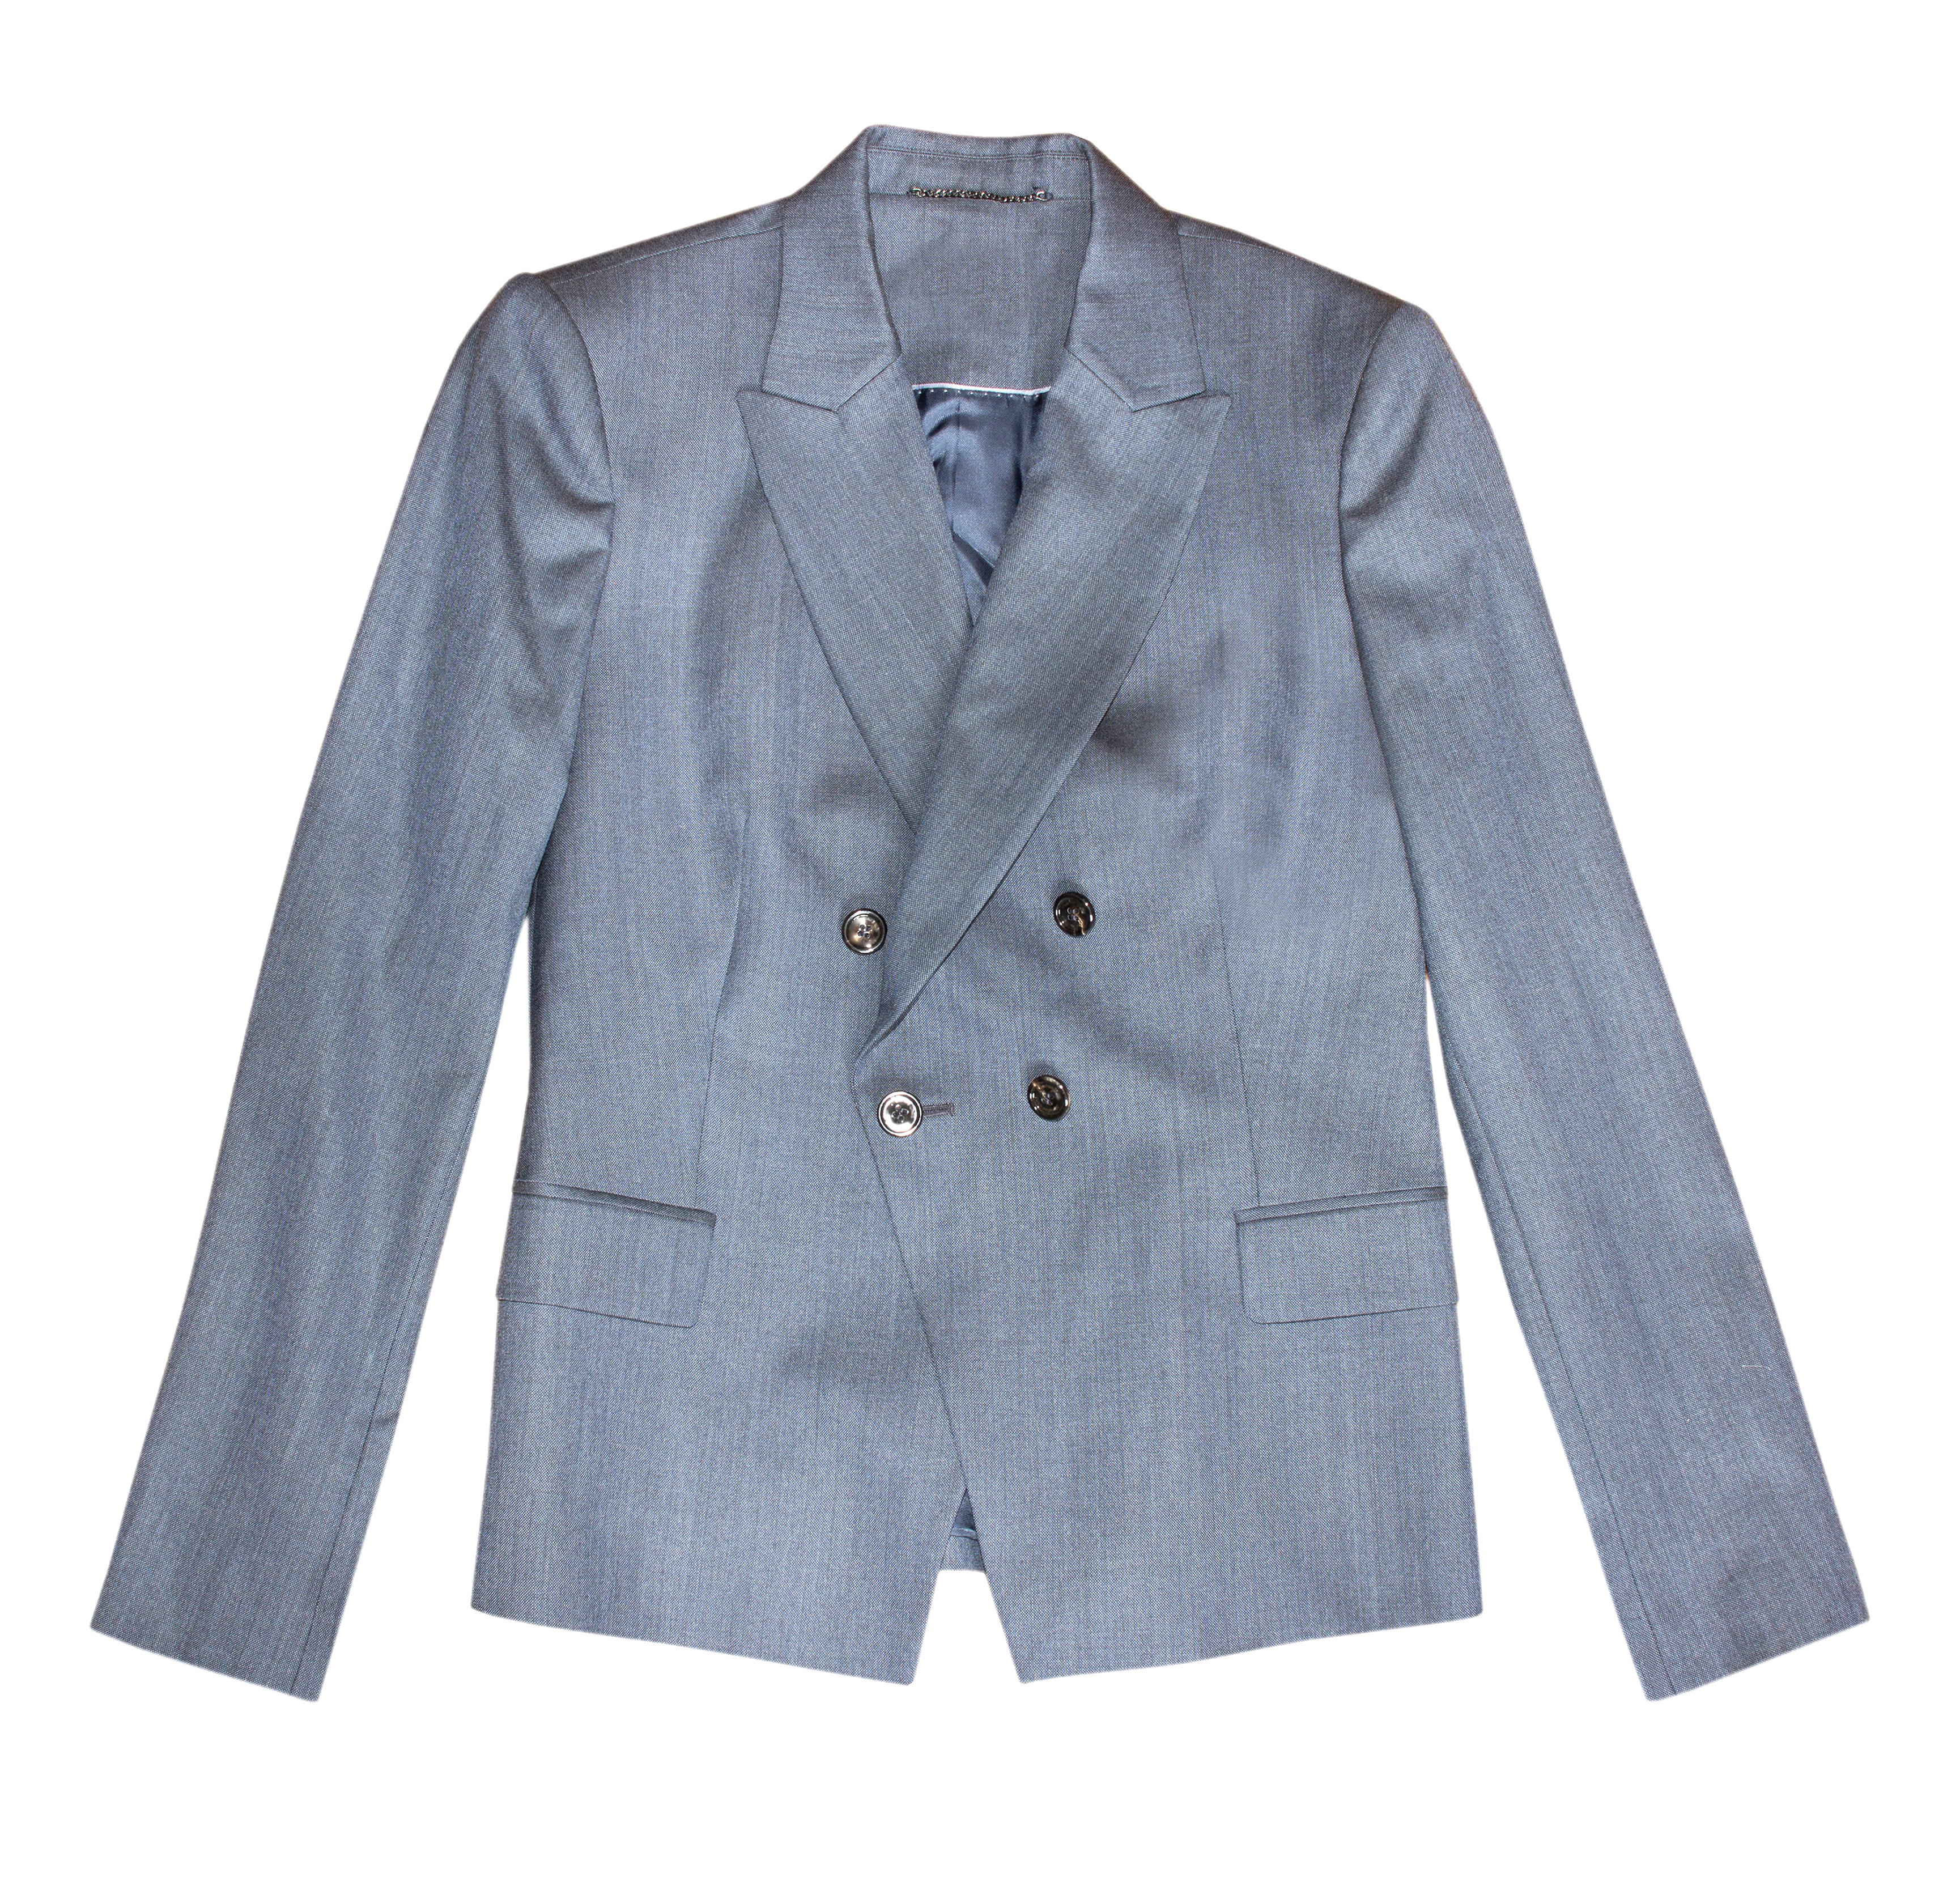 Grey classic female office jacket isolated